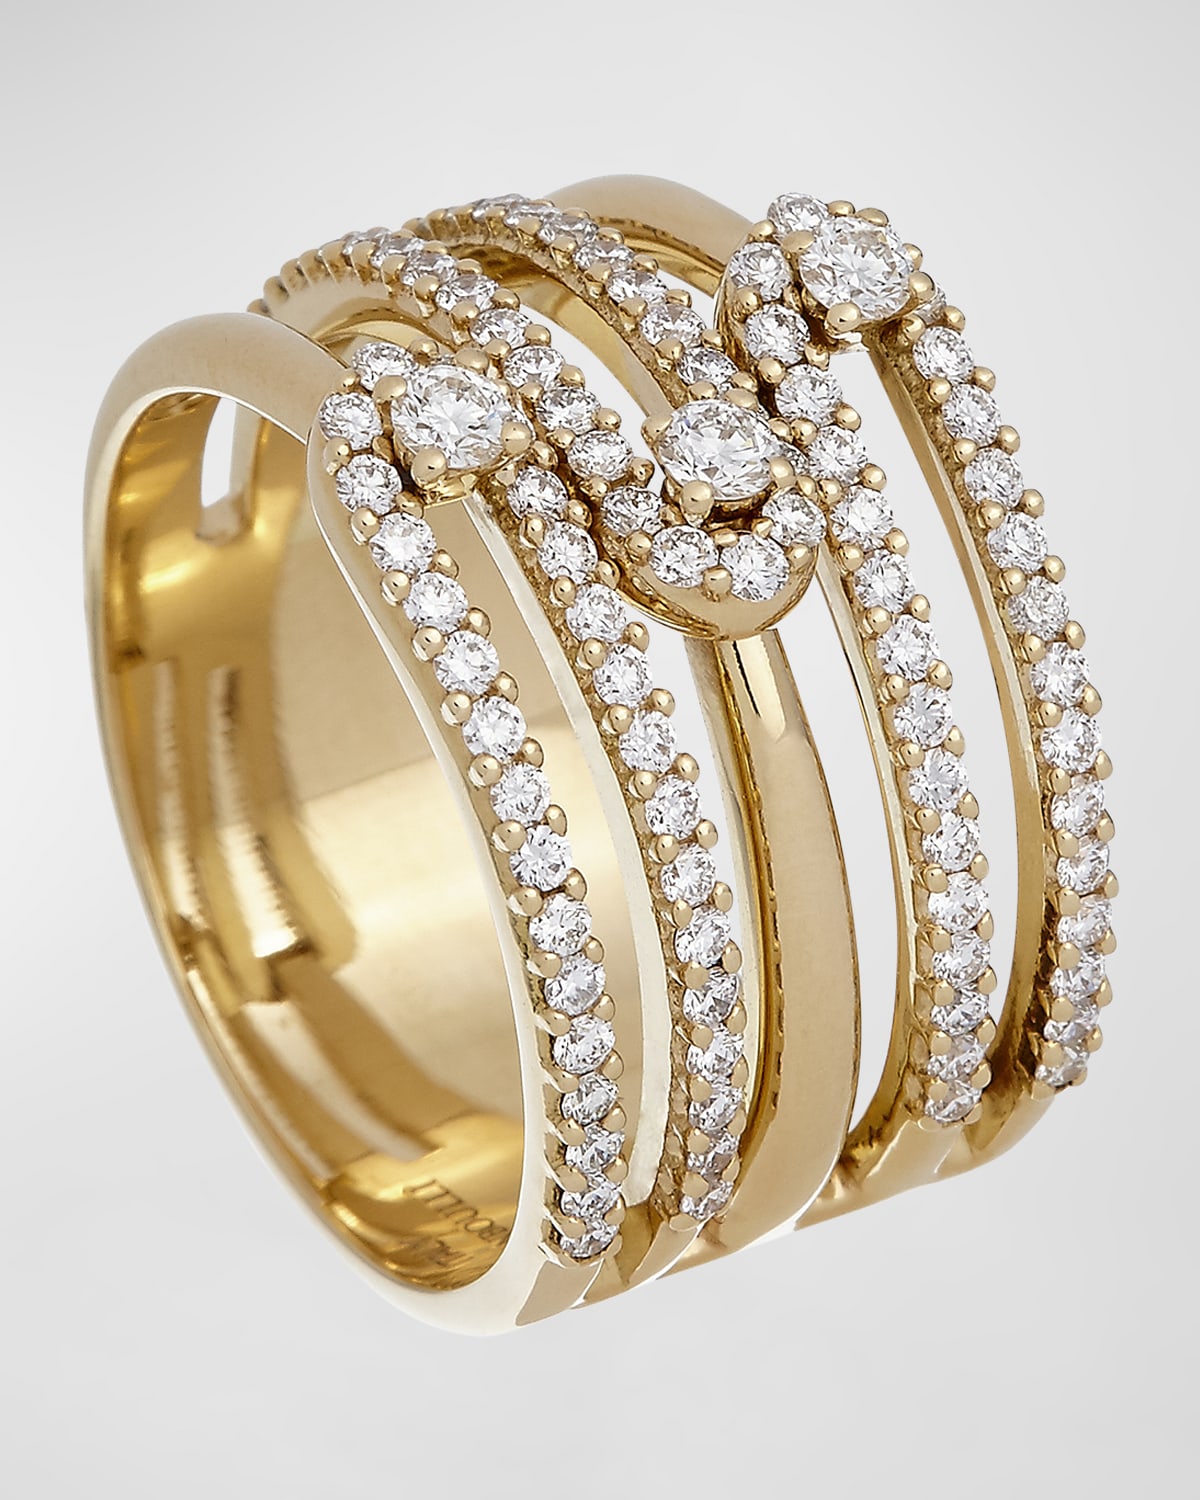 Krisonia 18k Yellow Gold Ring With Diamonds